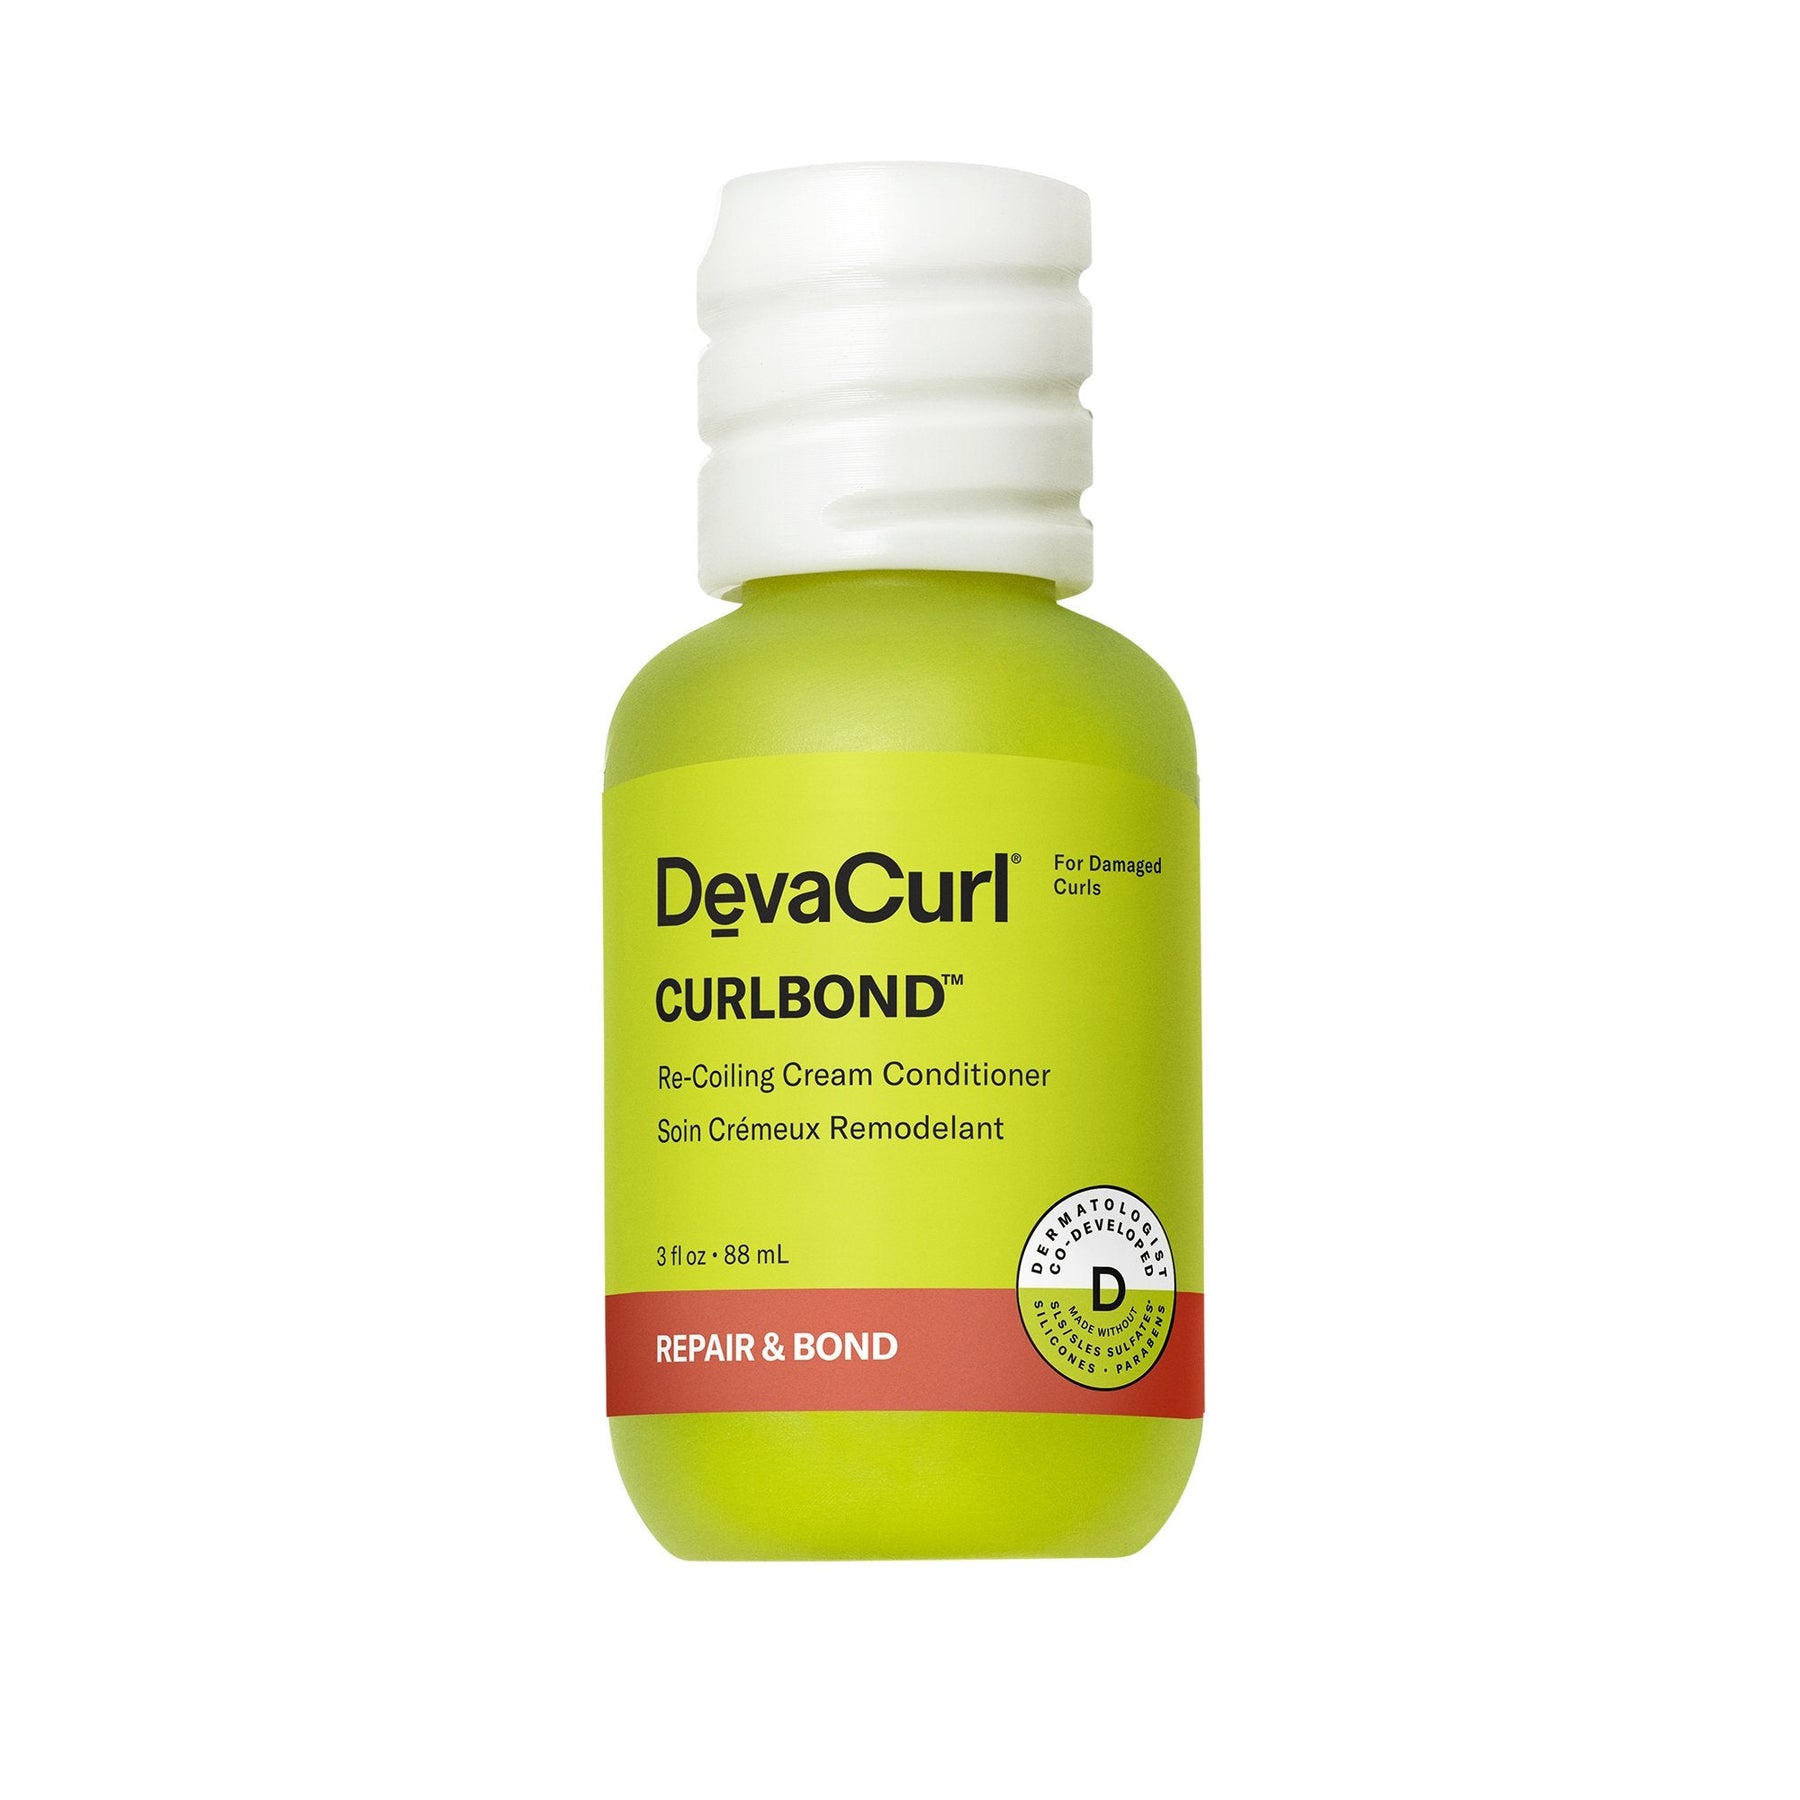 New! DevaCurl CurlBond Conditioner - 3oz - by Deva Curl |ProCare Outlet|